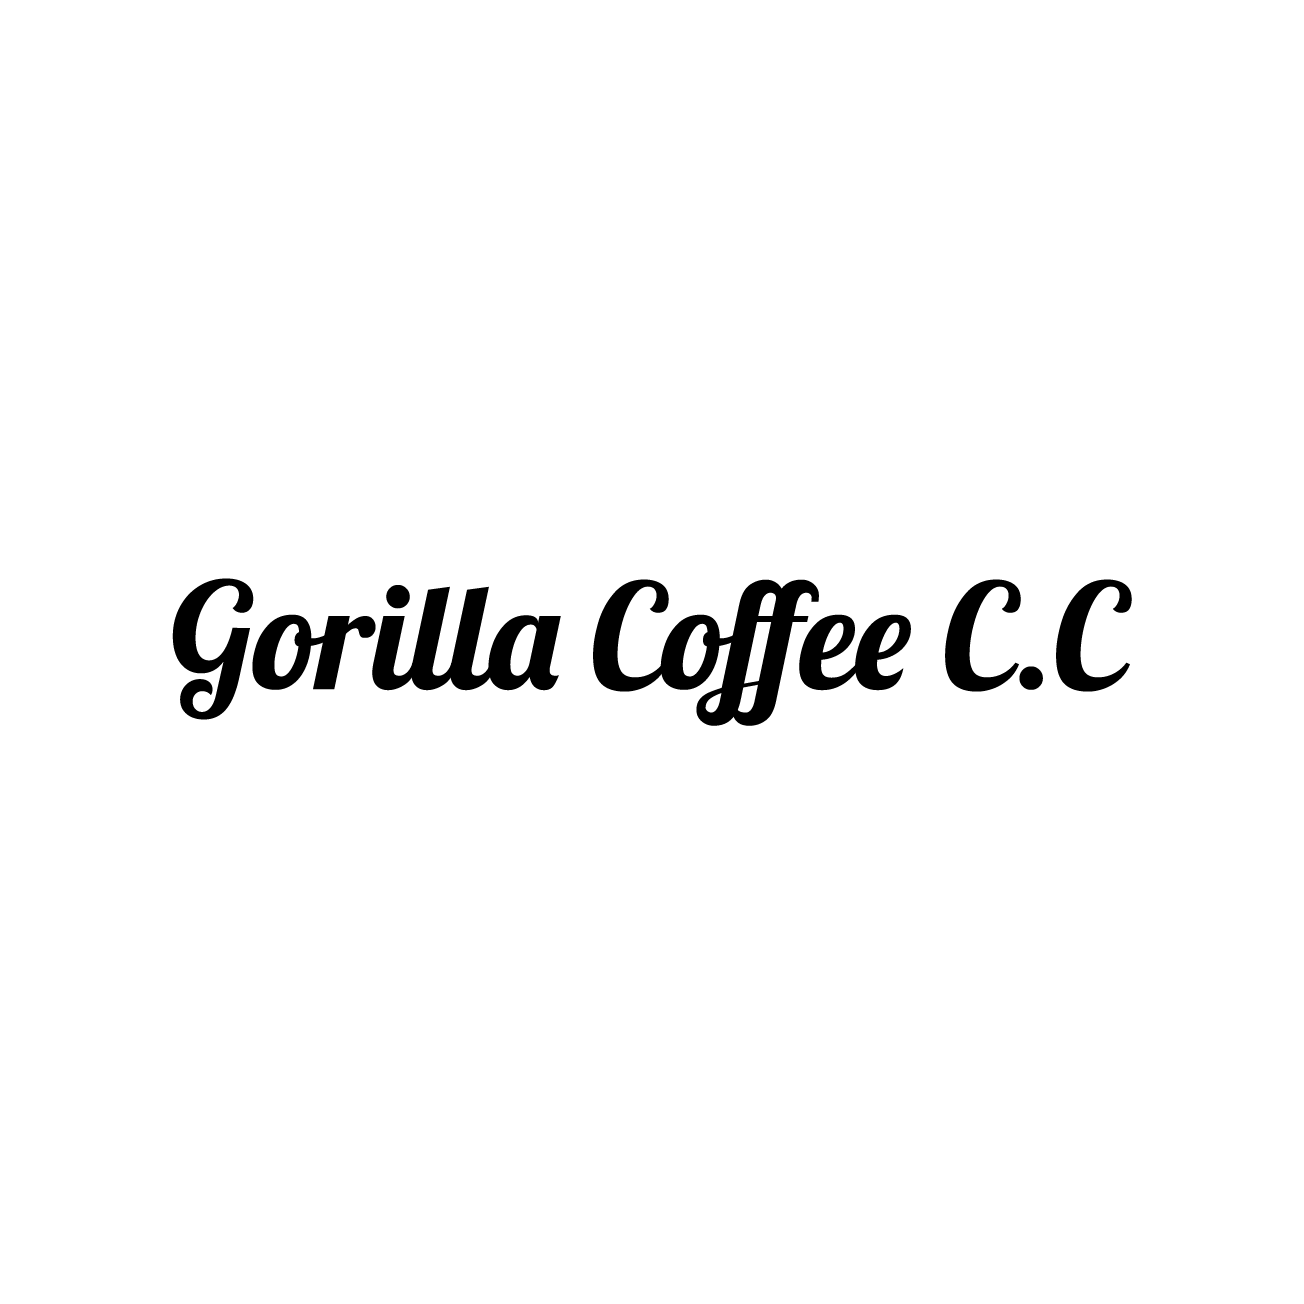 Club Image for GORILLA COFFEE CC